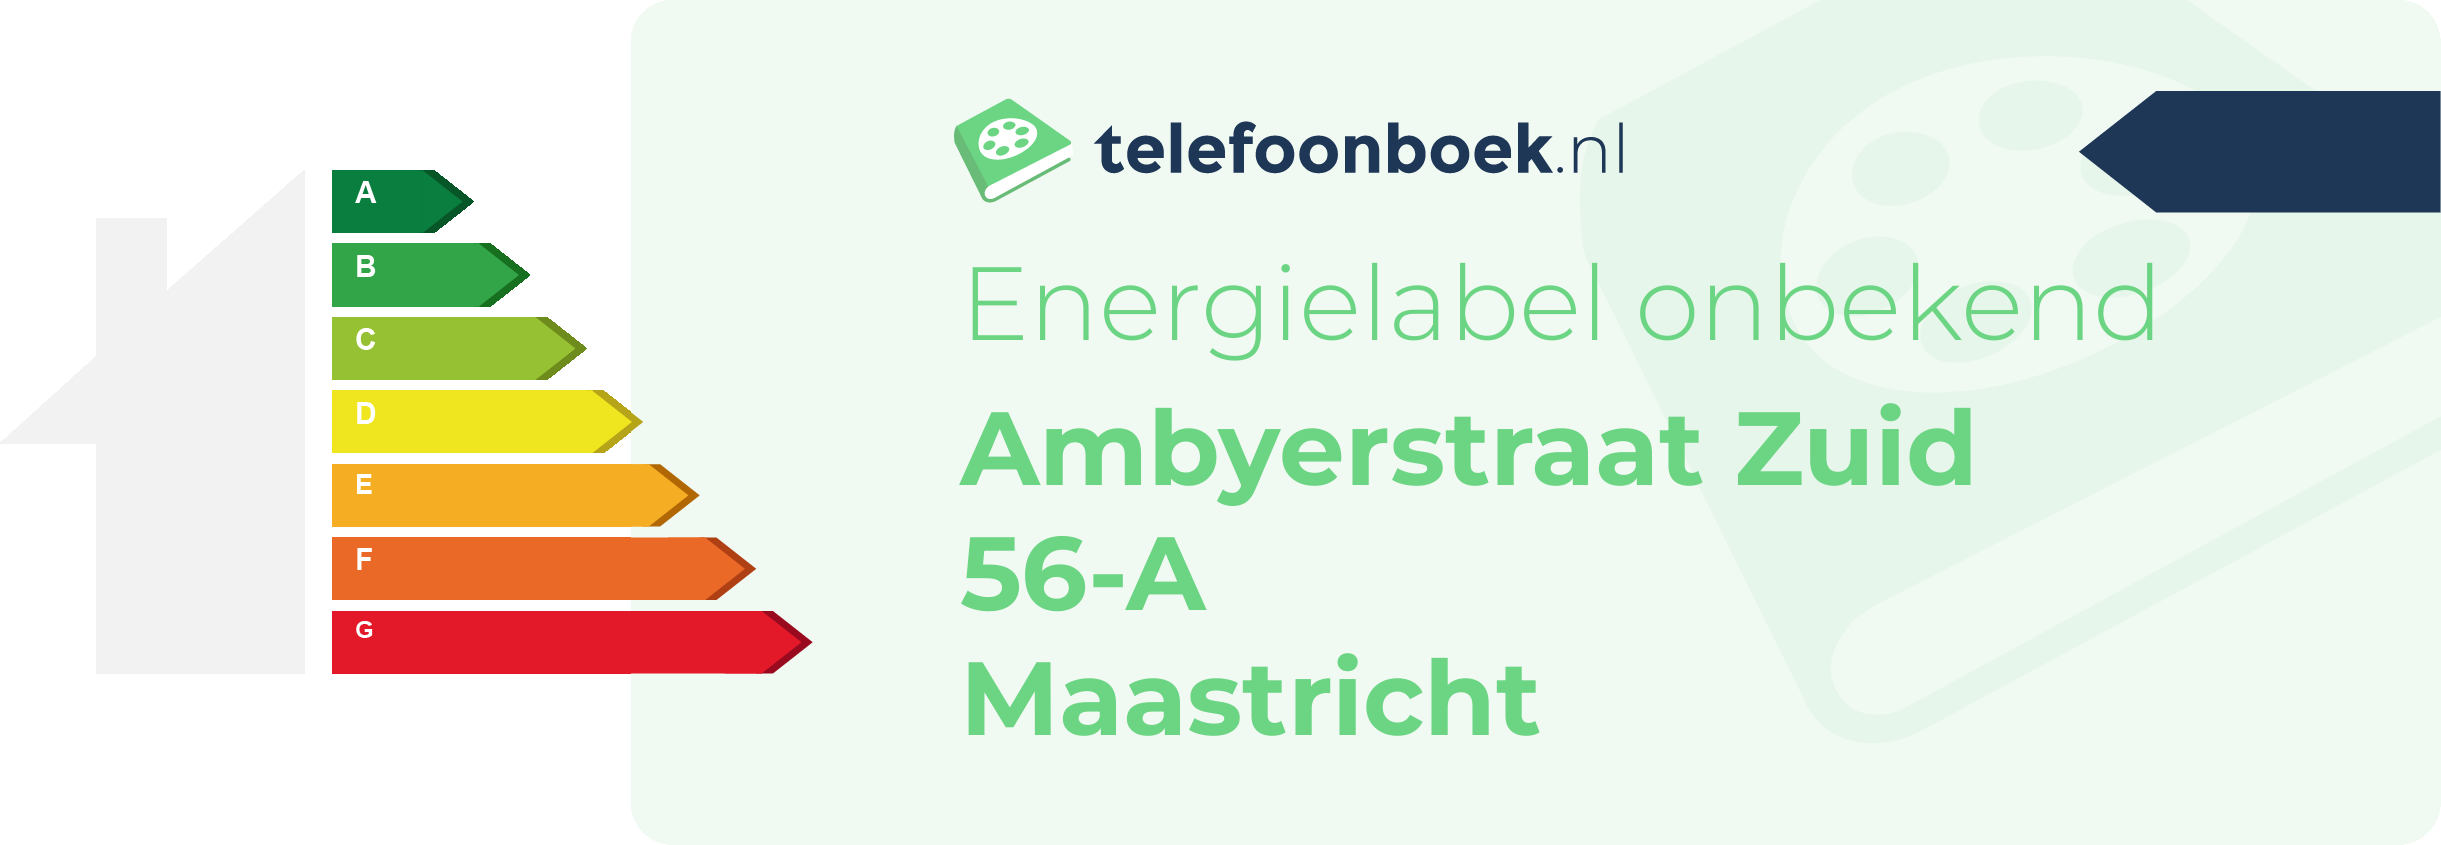 Energielabel Ambyerstraat Zuid 56-A Maastricht